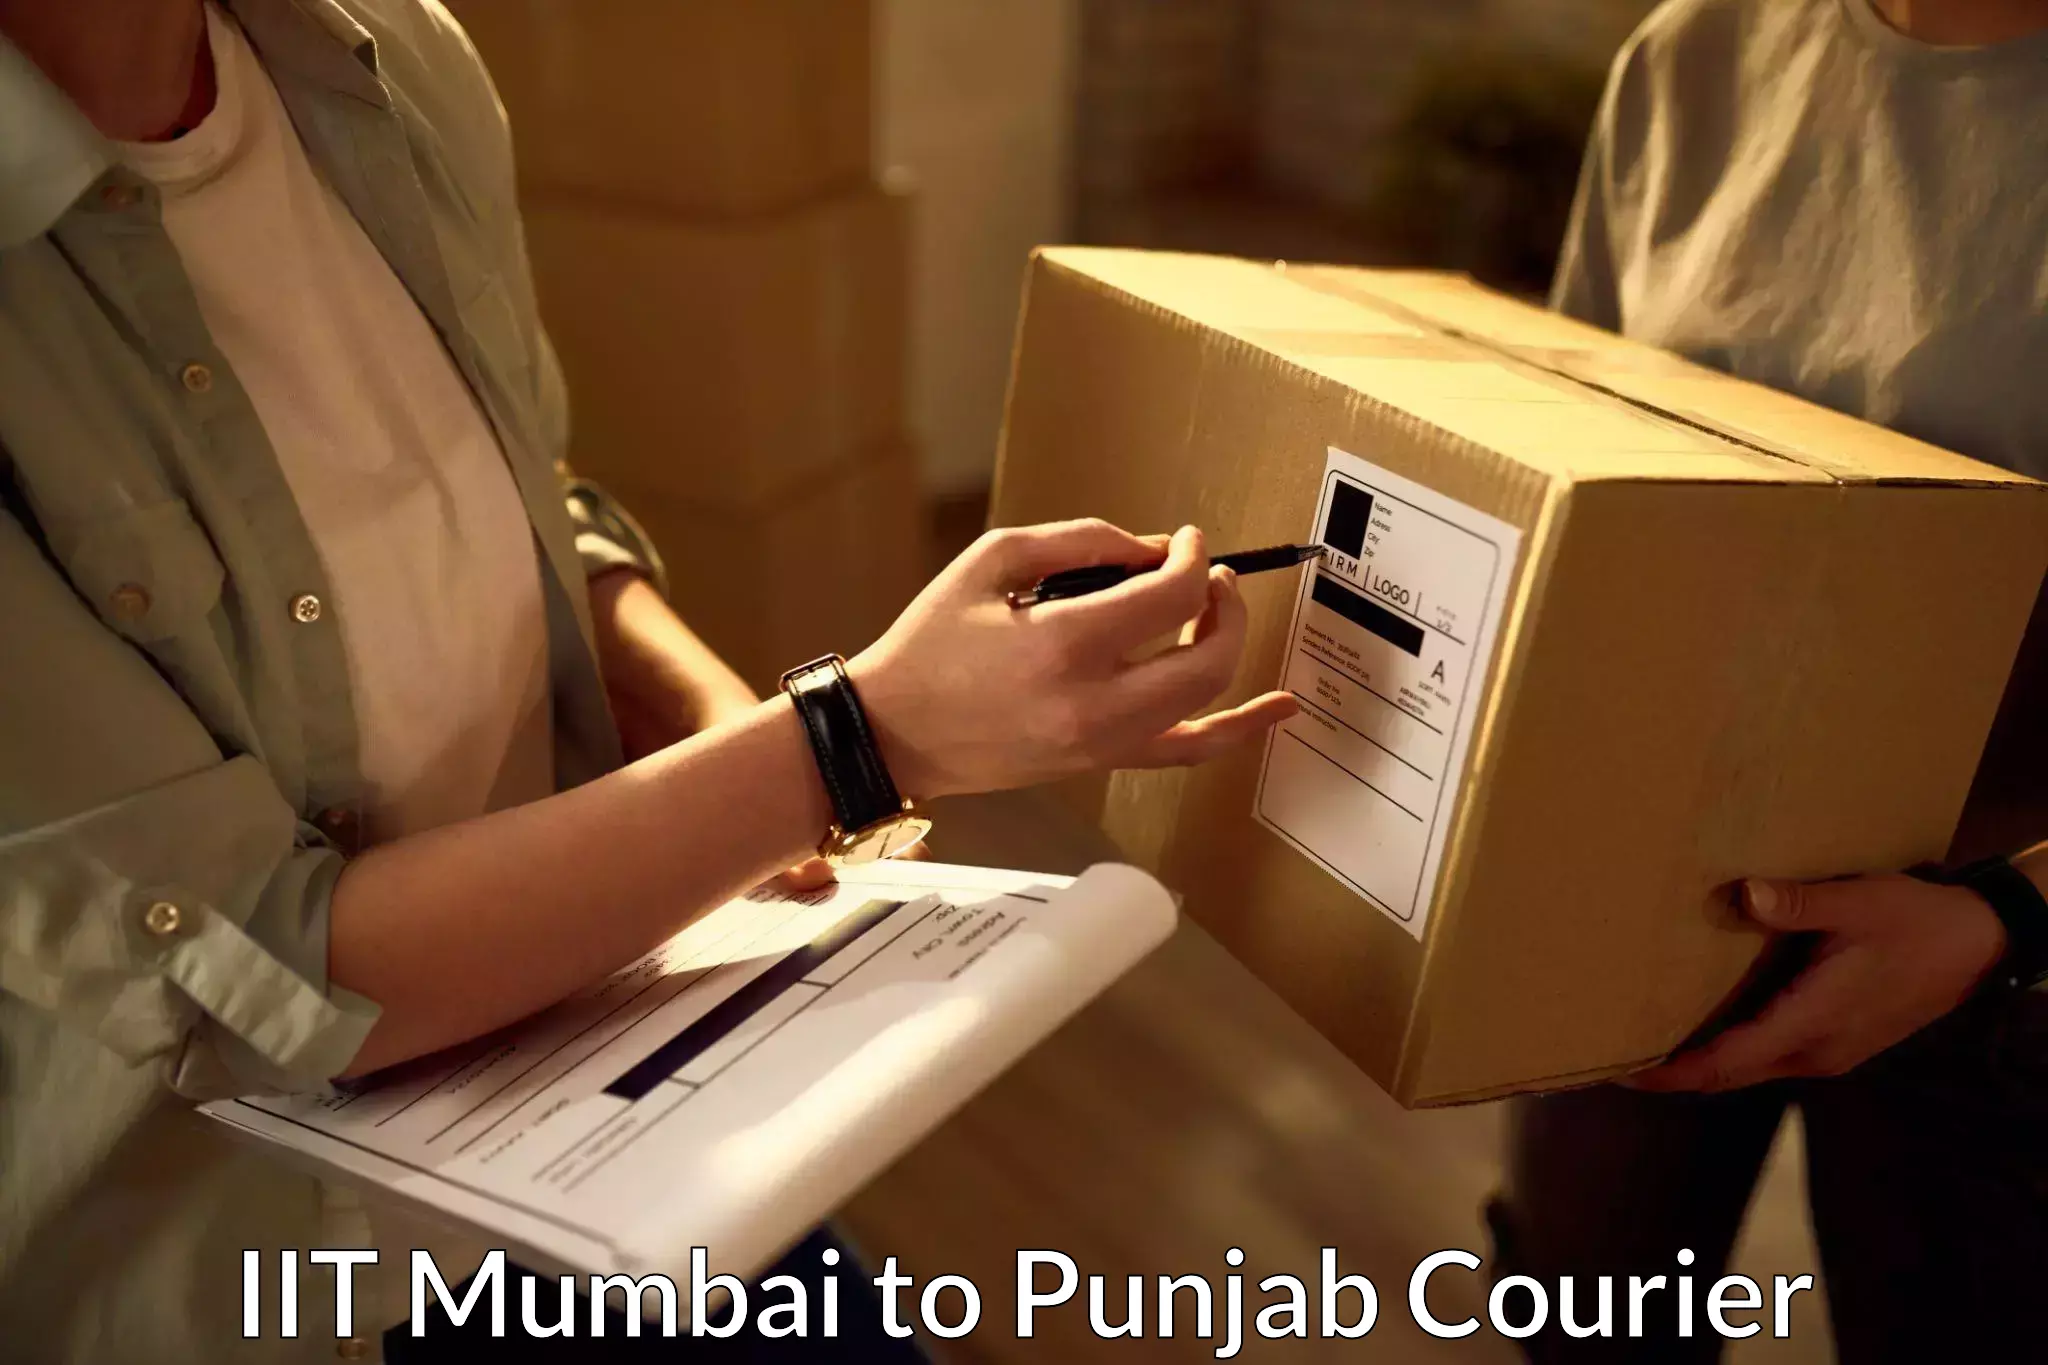 Global courier networks IIT Mumbai to Punjab